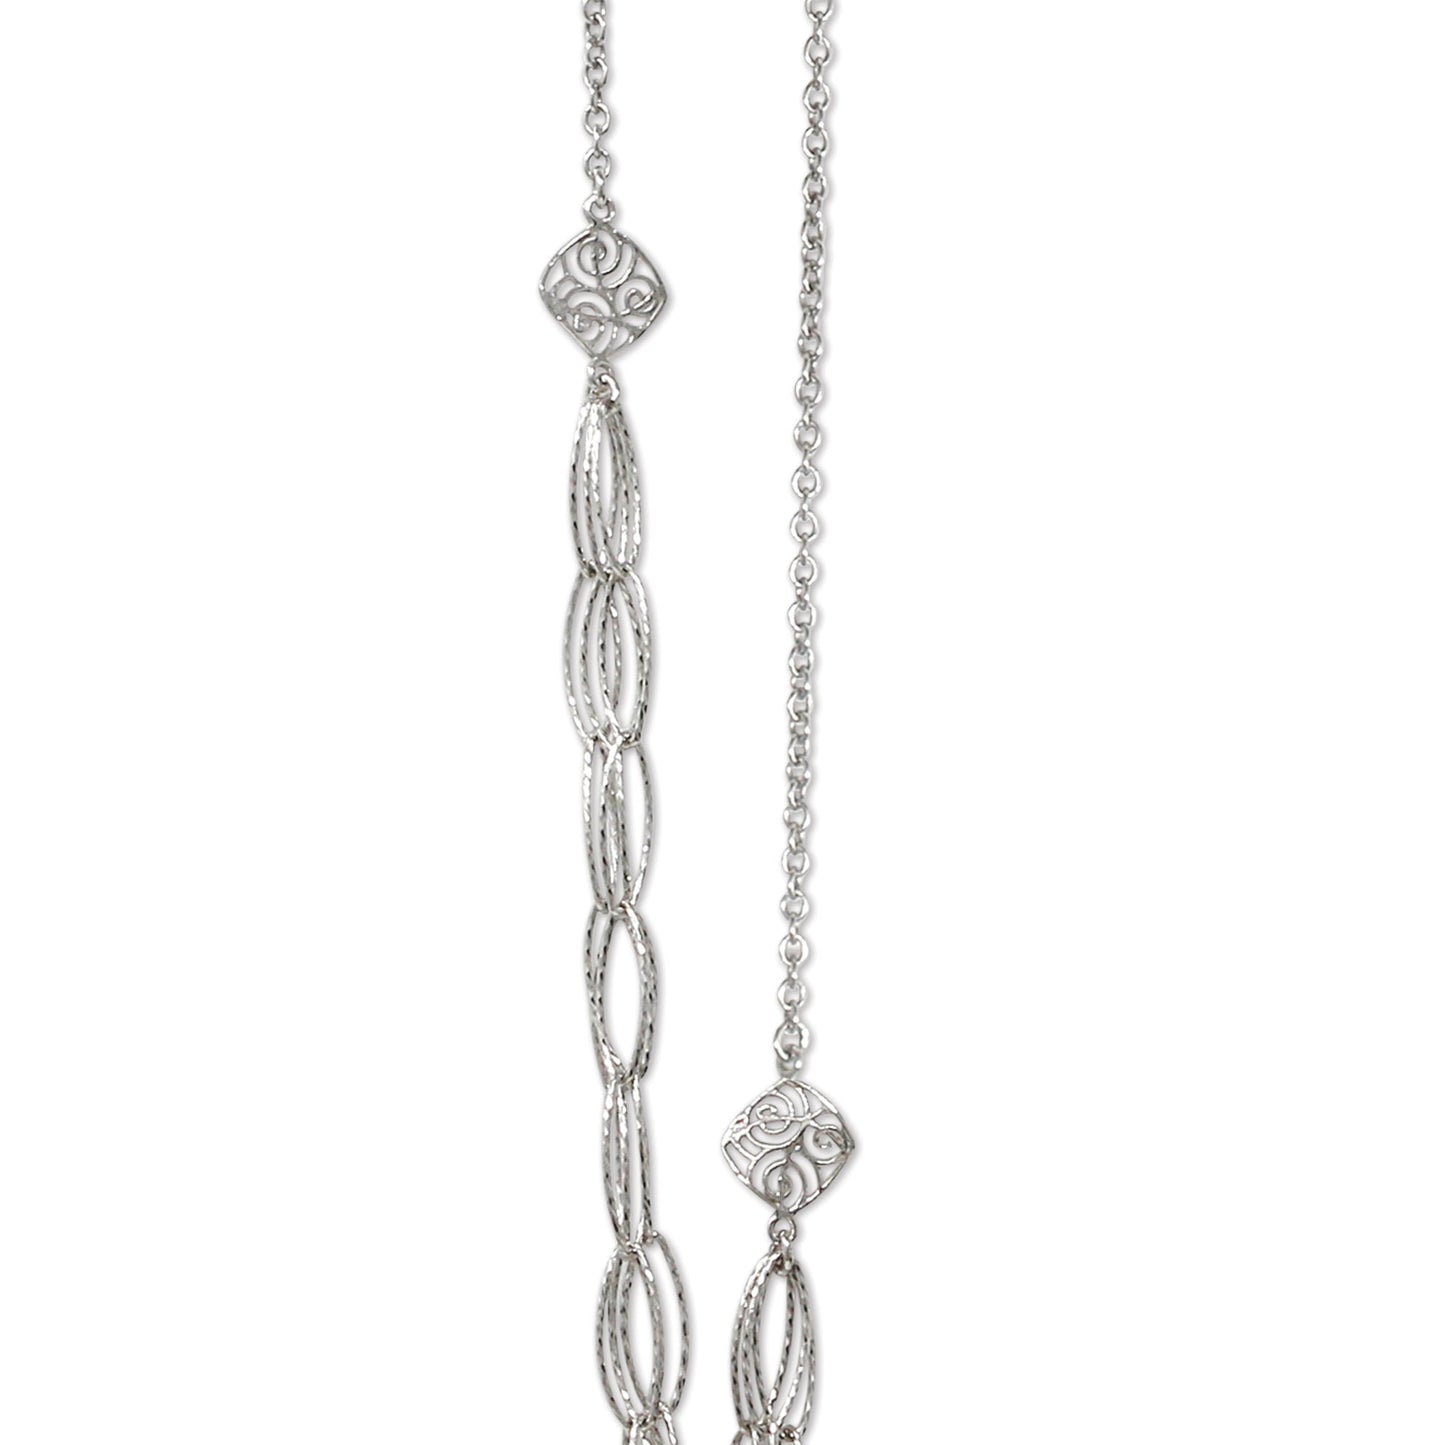 Franco Stellari Italian Sterling Silver Layered Links 36" Long Necklace